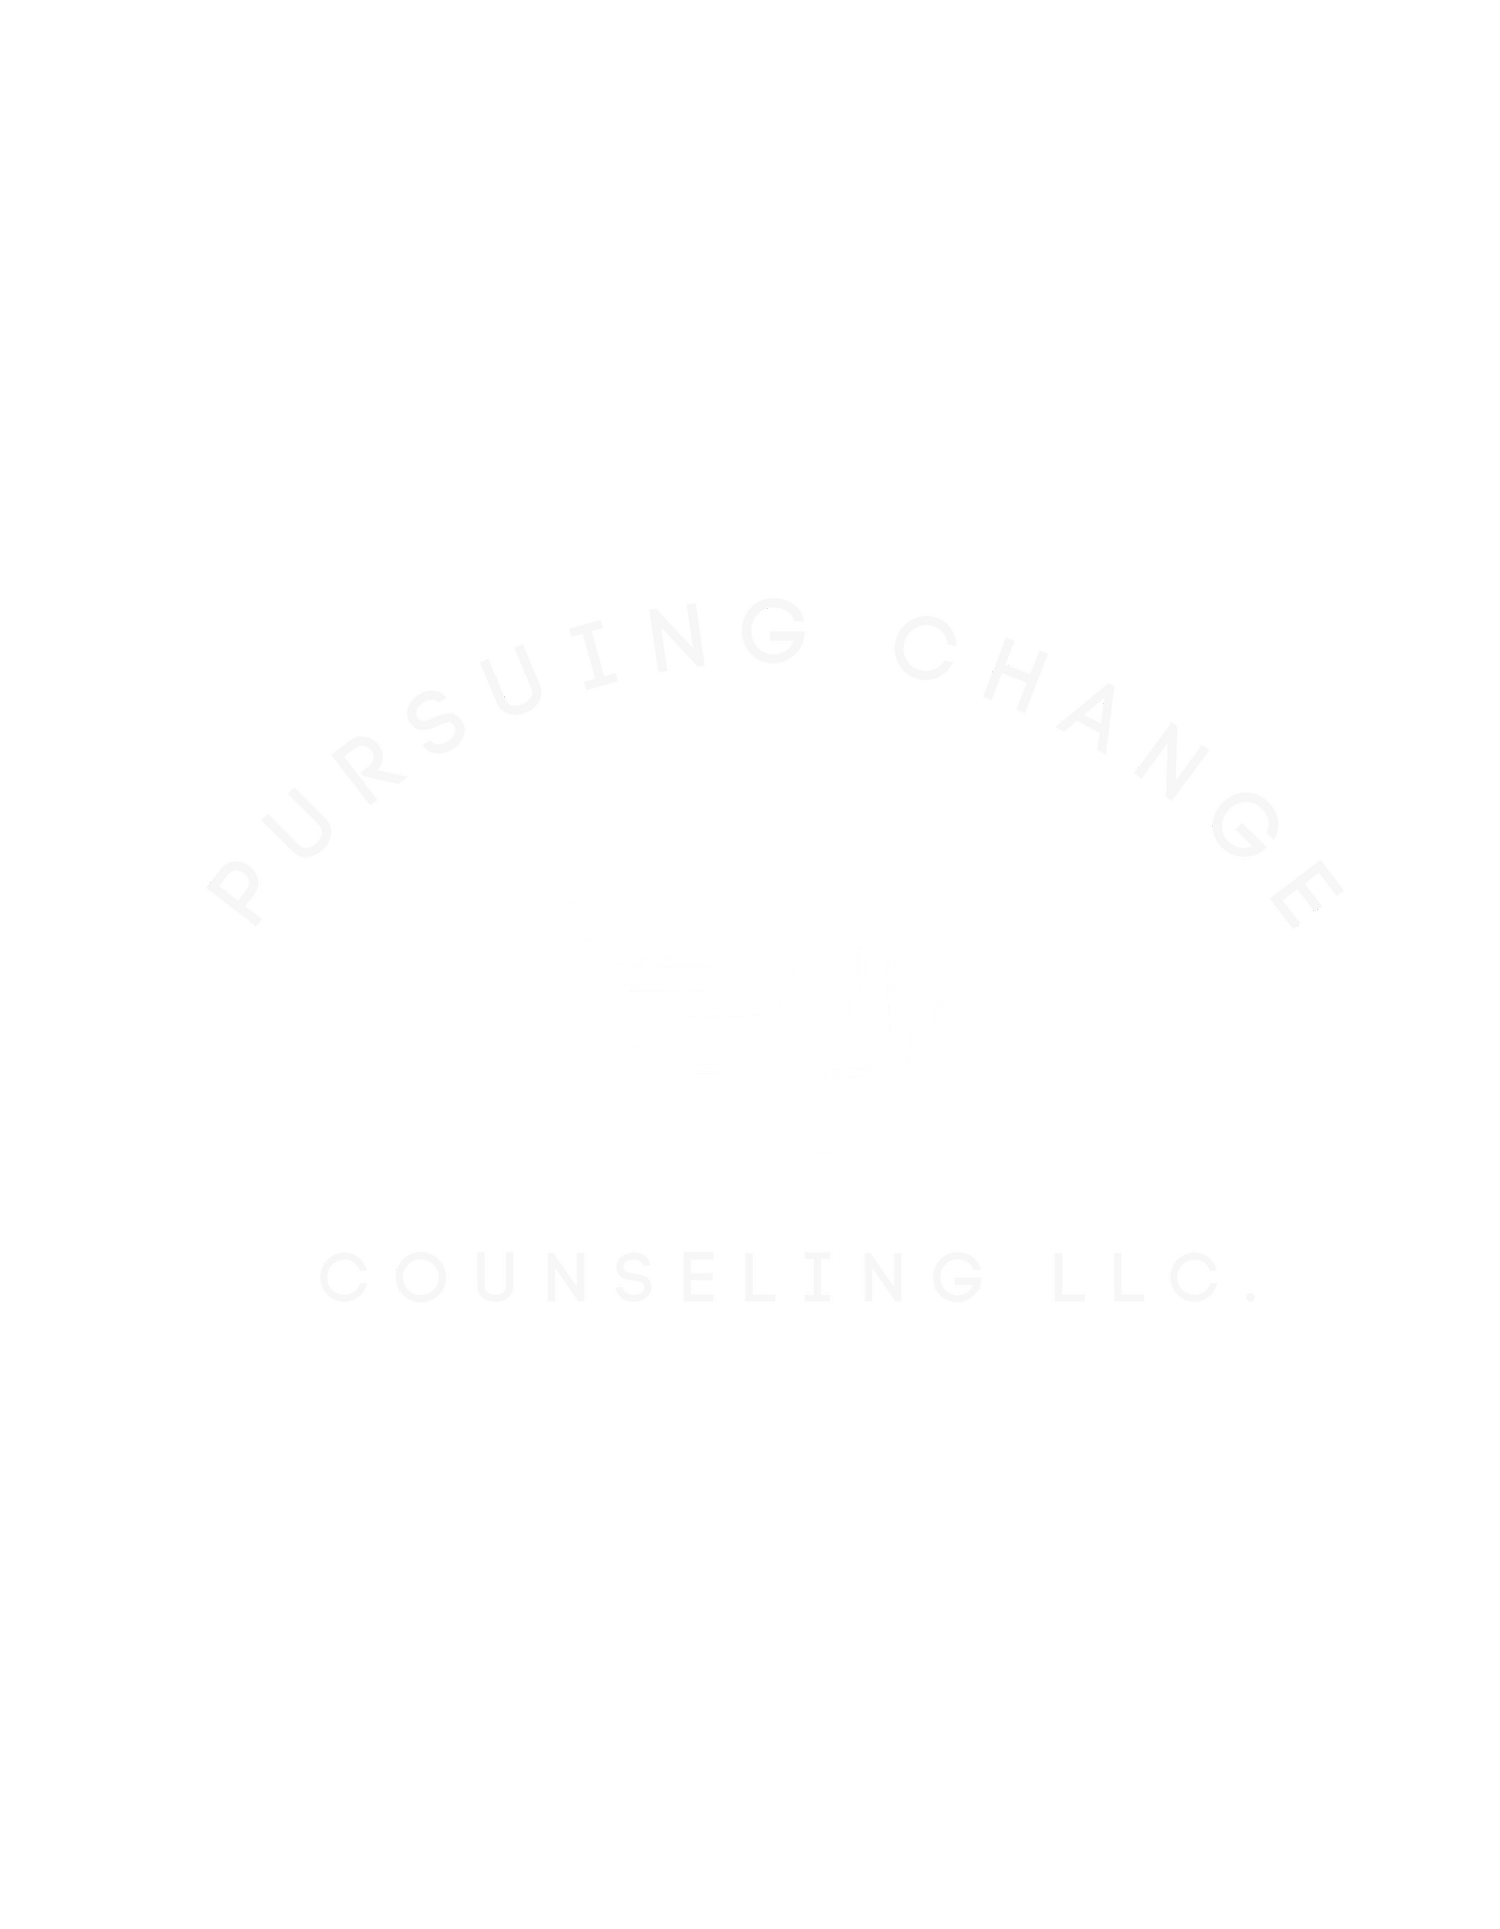 Pursuing Change Counseling, LLC.